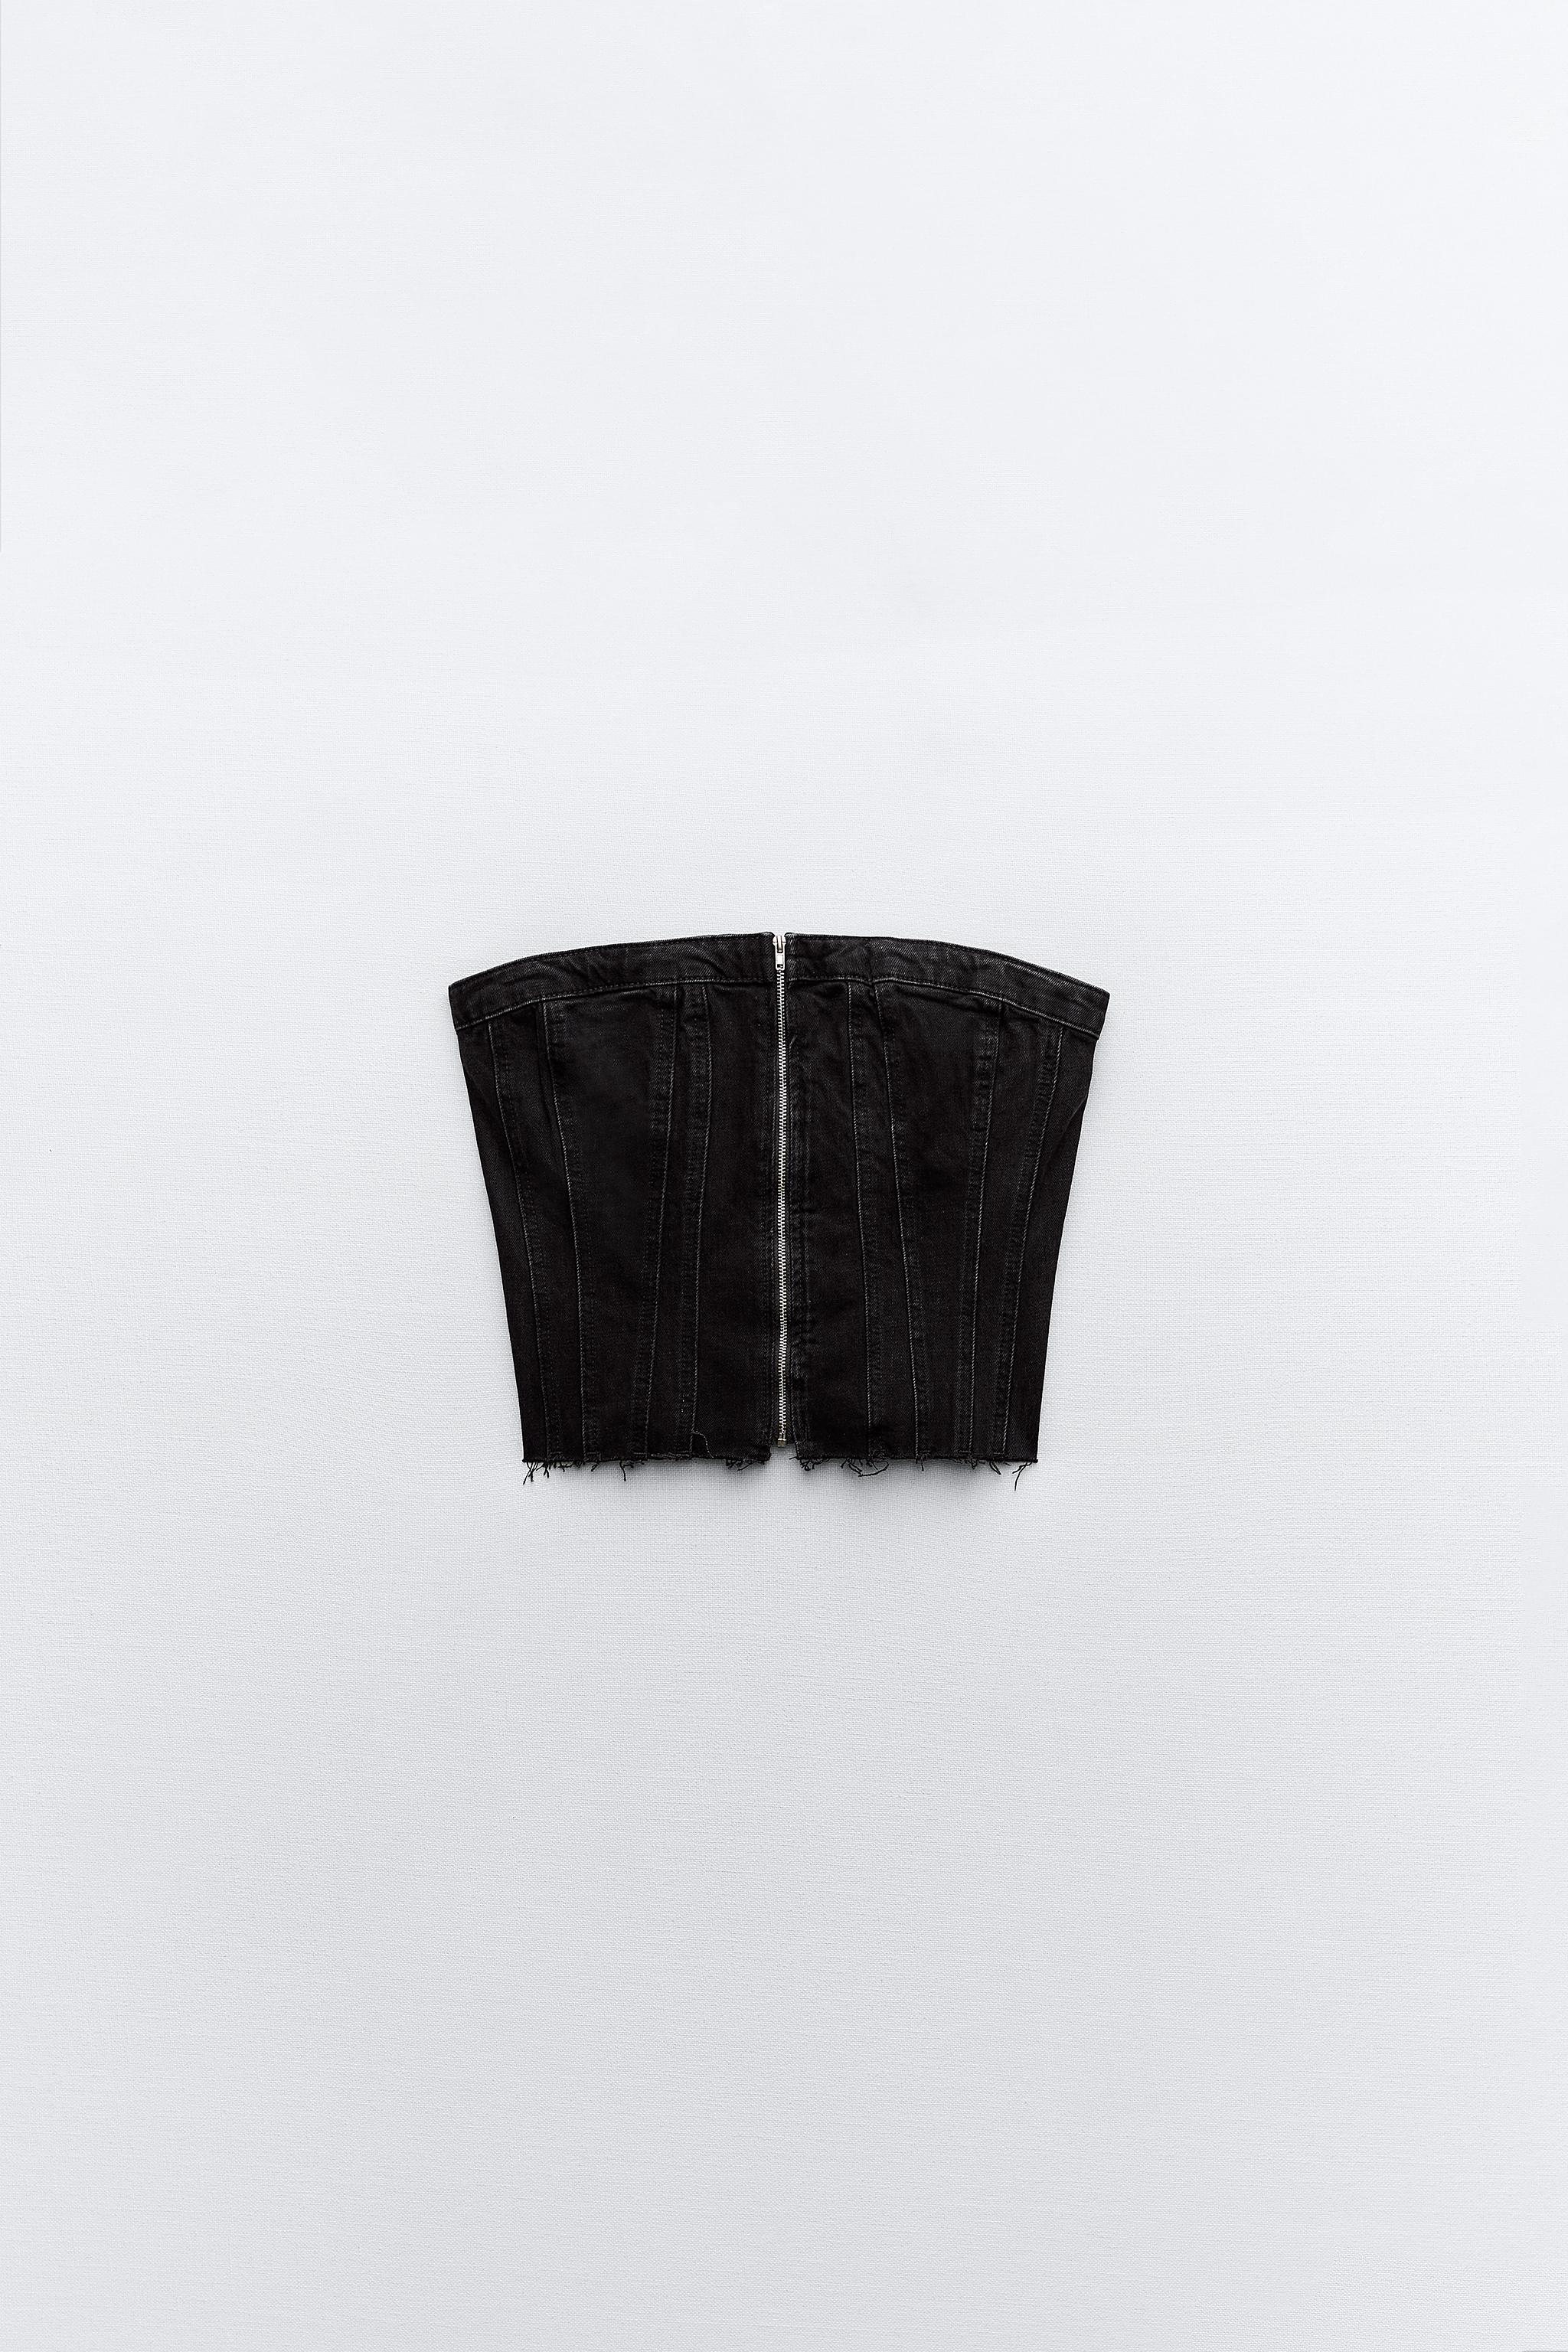 ZARA Tulle Corset Top Black Size XS - $28 (22% Off Retail) New